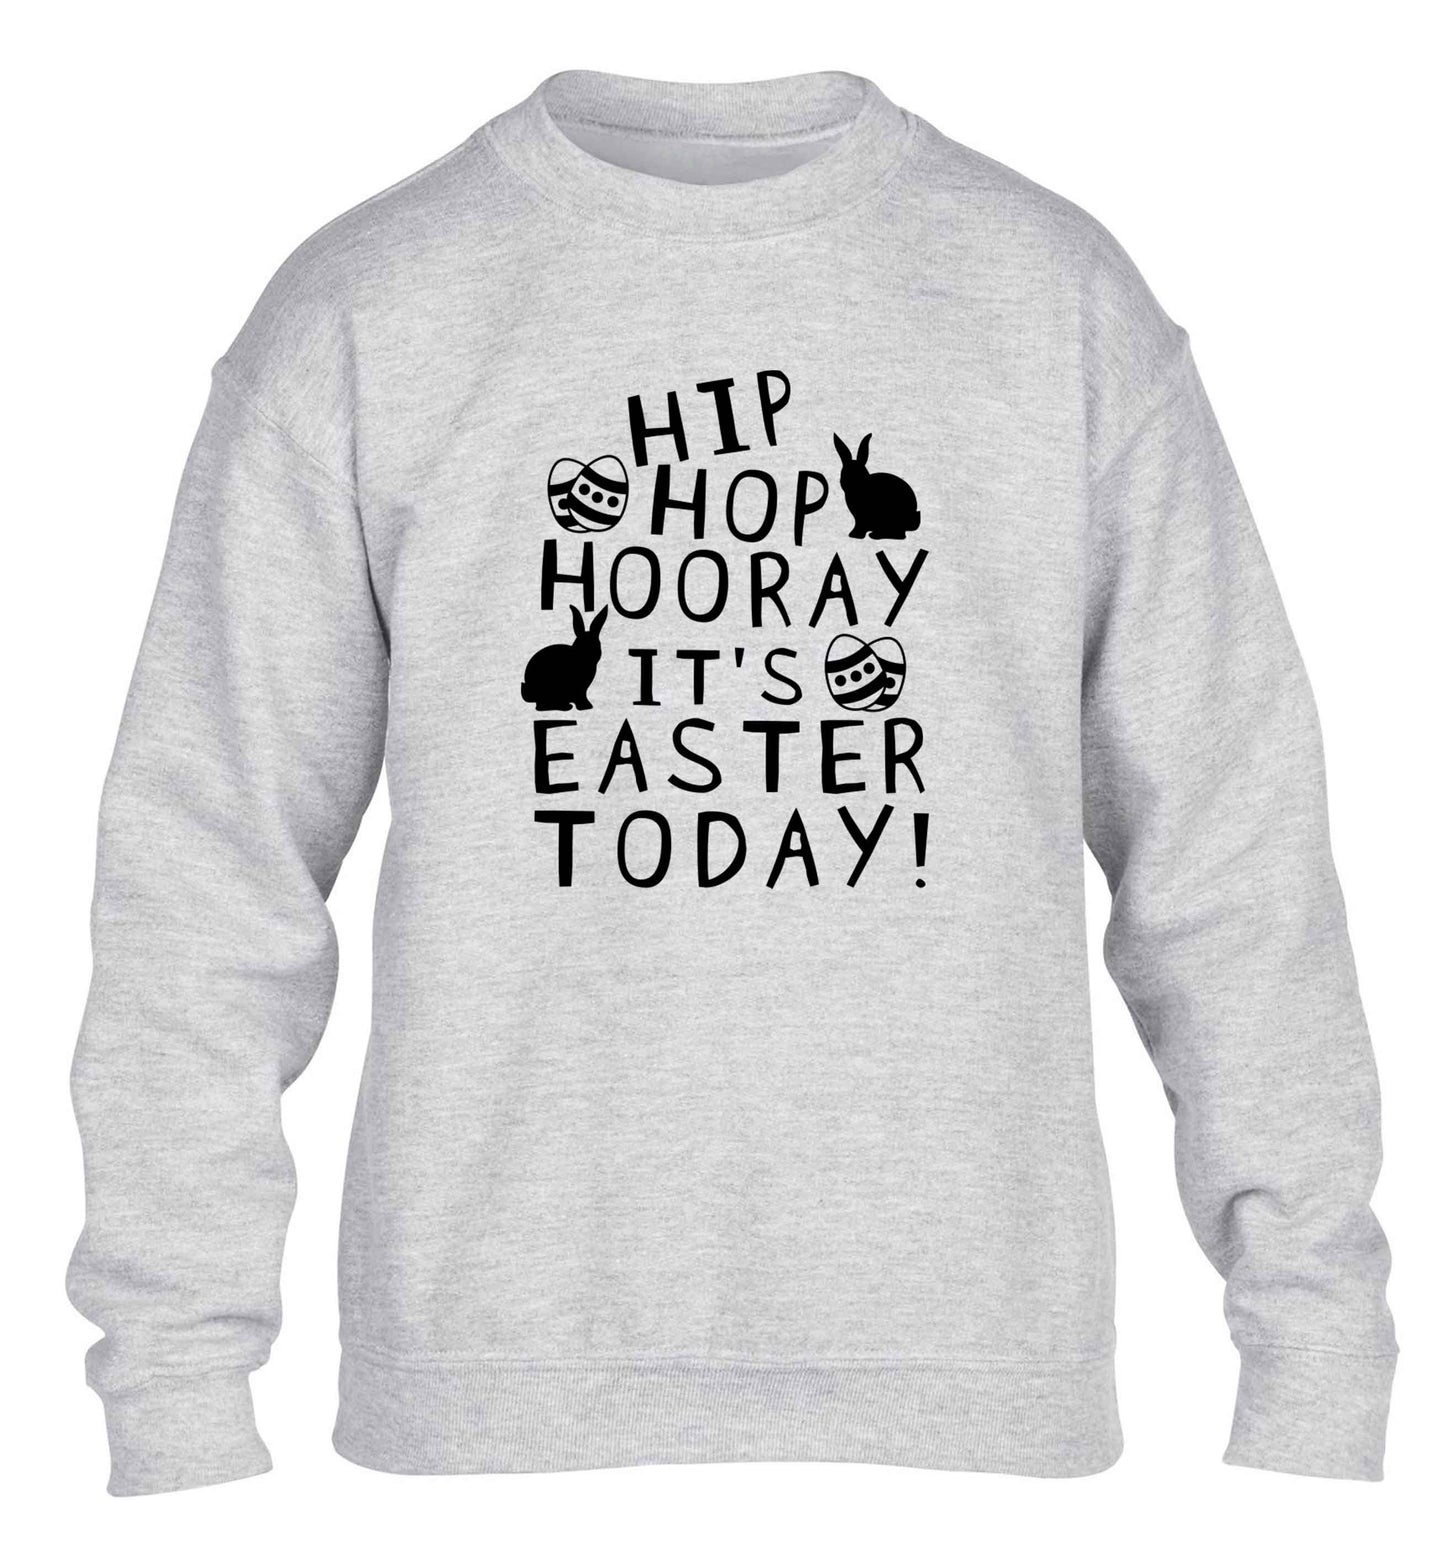 Hip hip hooray it's Easter today! children's grey sweater 12-13 Years